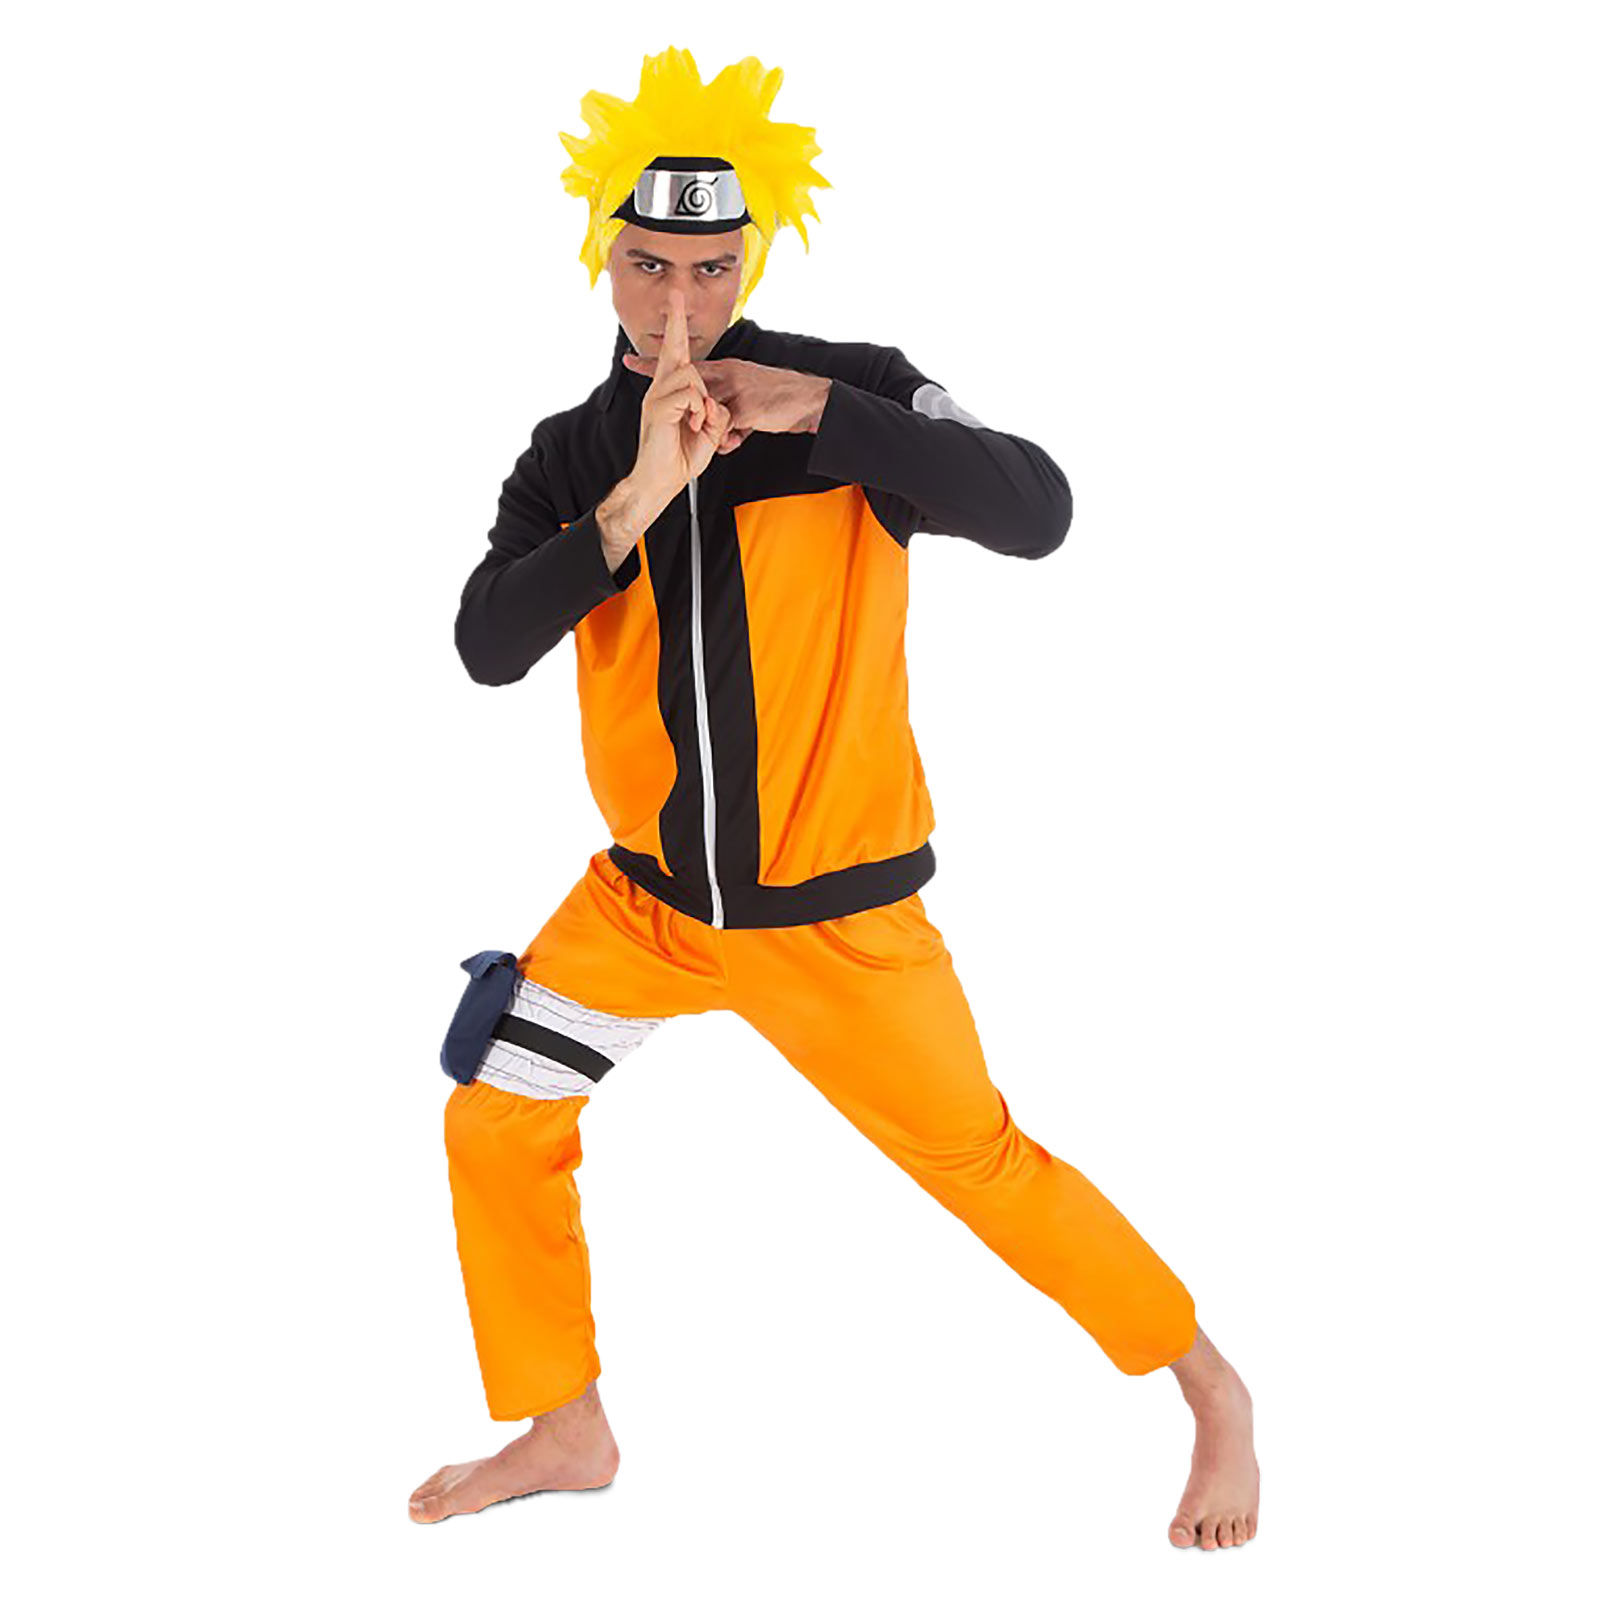 Naruto Uzumaki costume for adults